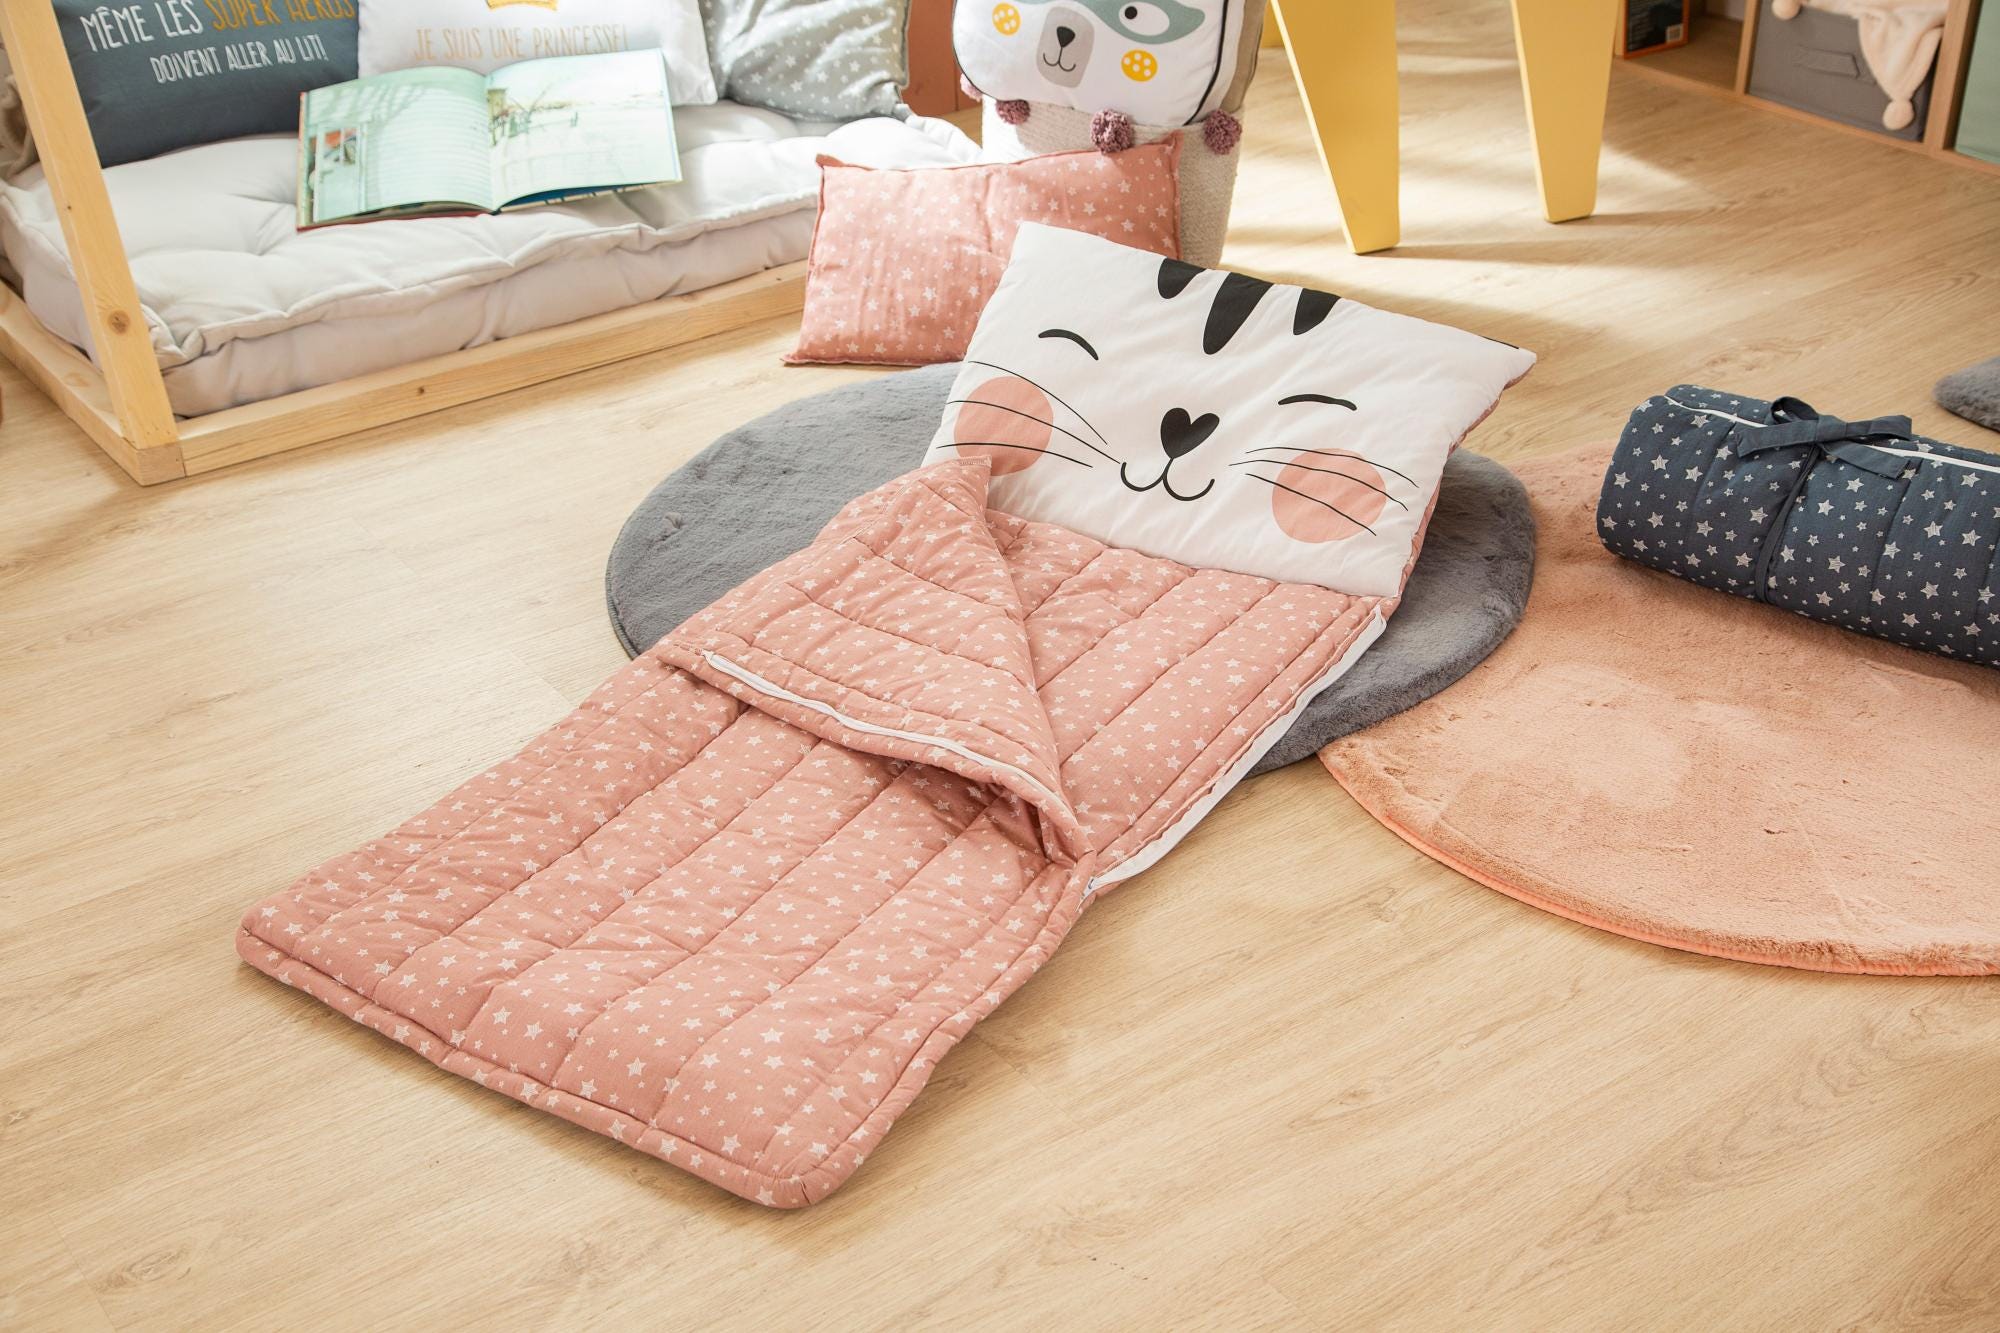 Saco de dormir infantil Gato rosa 100 % algodón de 142x62 cm